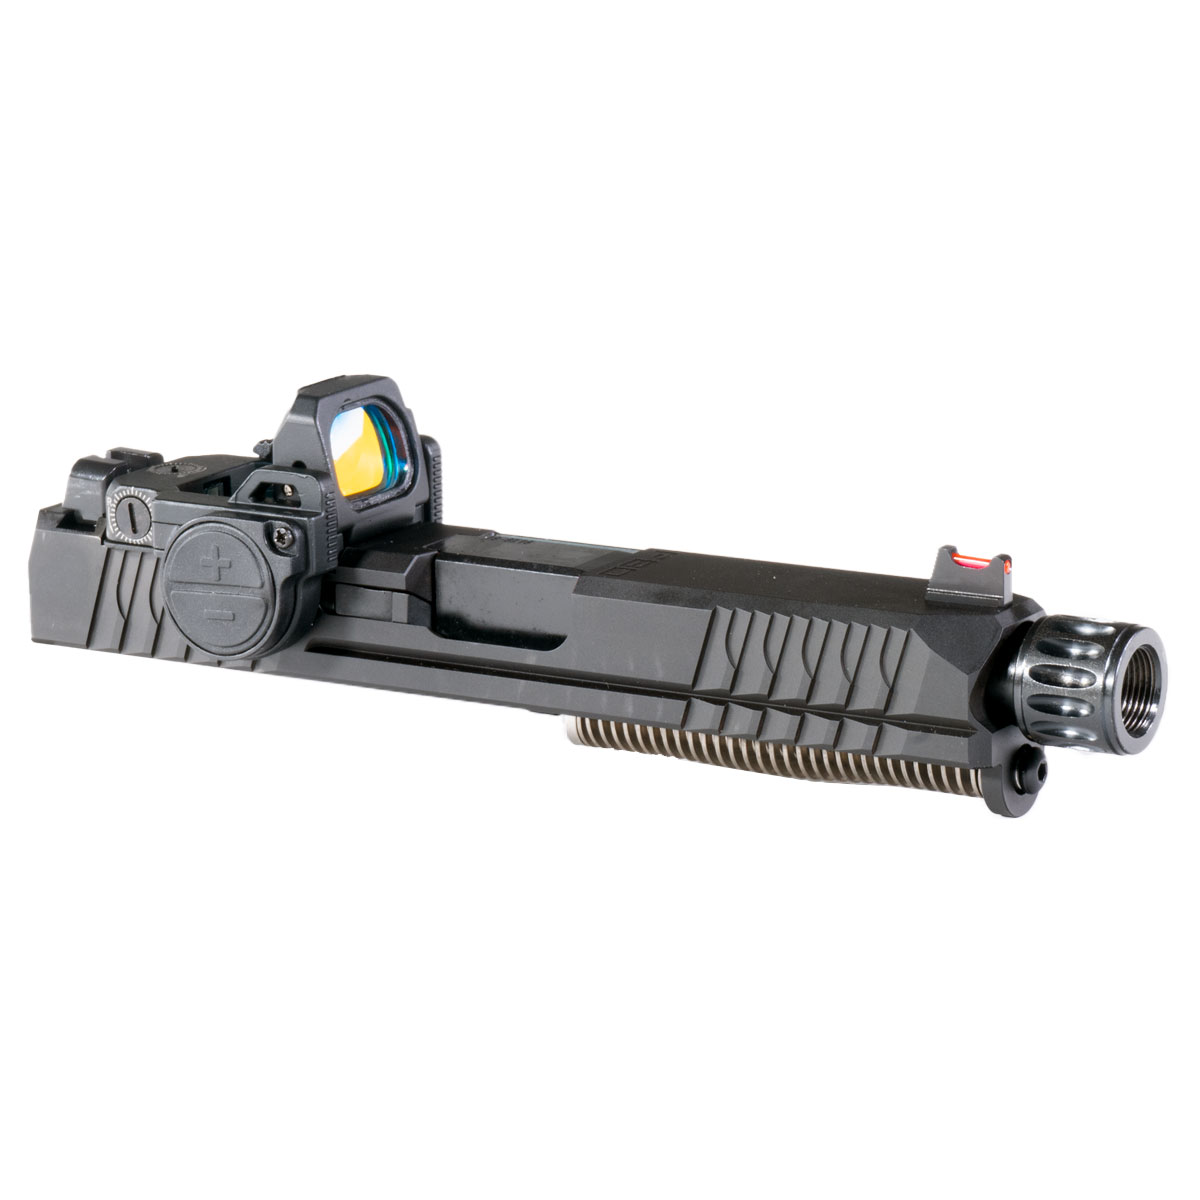 DD 'Oiseau w/ VISM FlipDot Pro' 9mm Complete Slide Kit - Glock 19 Gen 1-3 Compatible